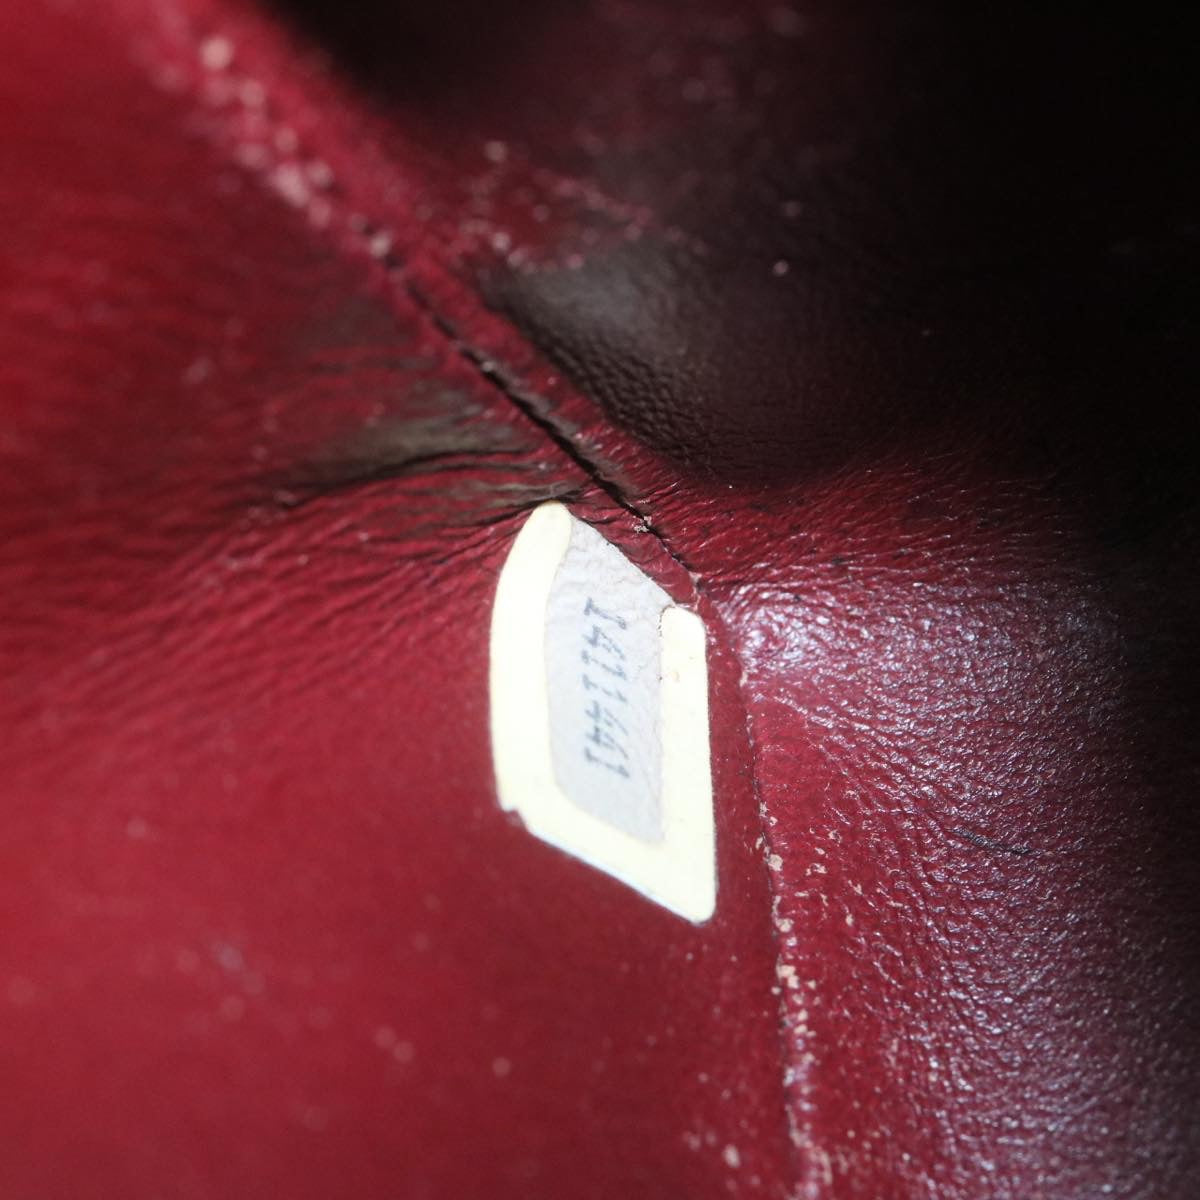 CHANEL Mini Matelasse Chain Flap Shoulder Bag Lamb Skin Black Gold Auth 29069A